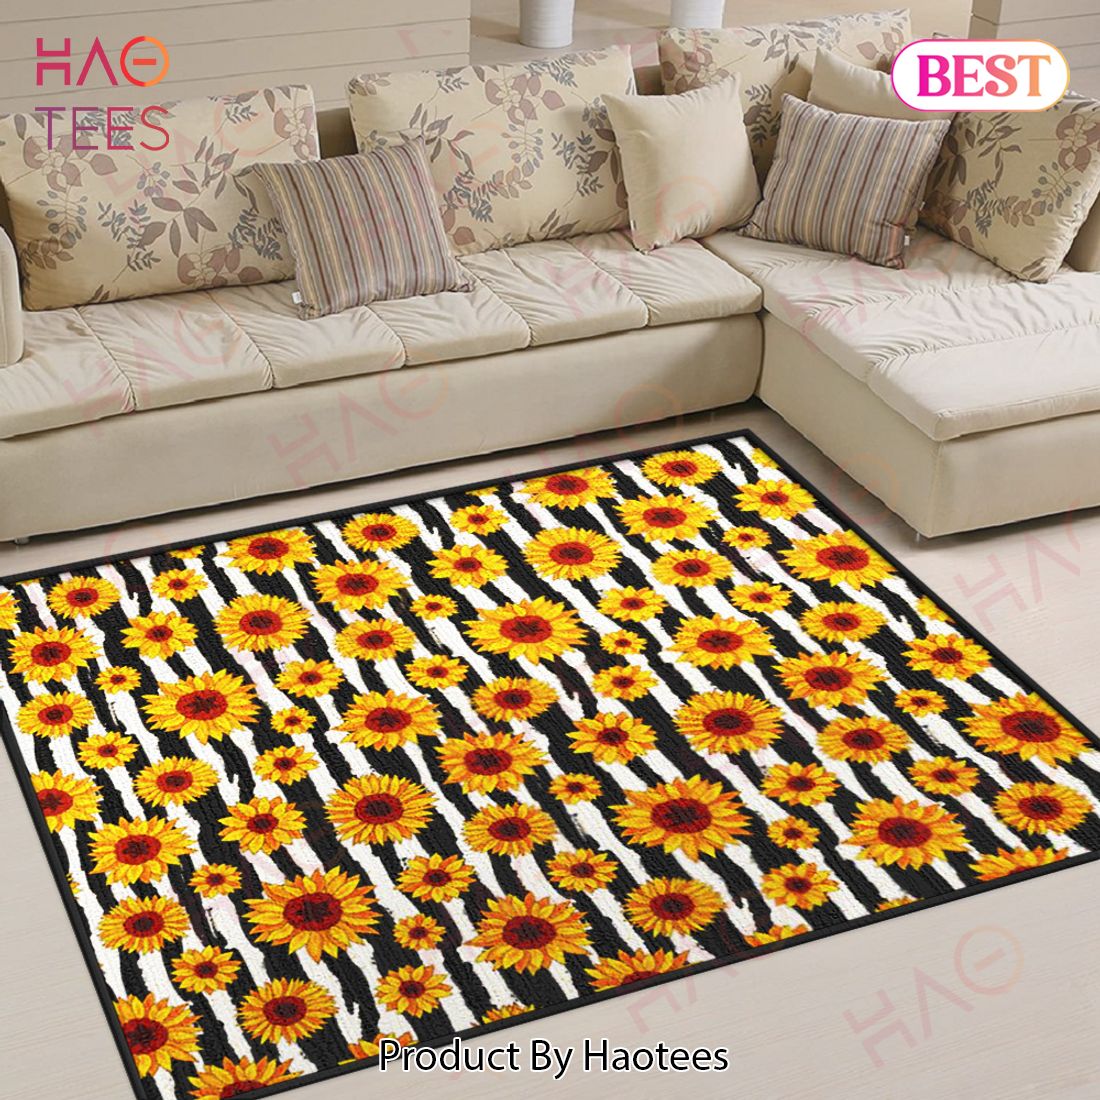 White And Black Stripe Sunflower Area Rugs Carpet Mat Kitchen Rugs Floor Decor